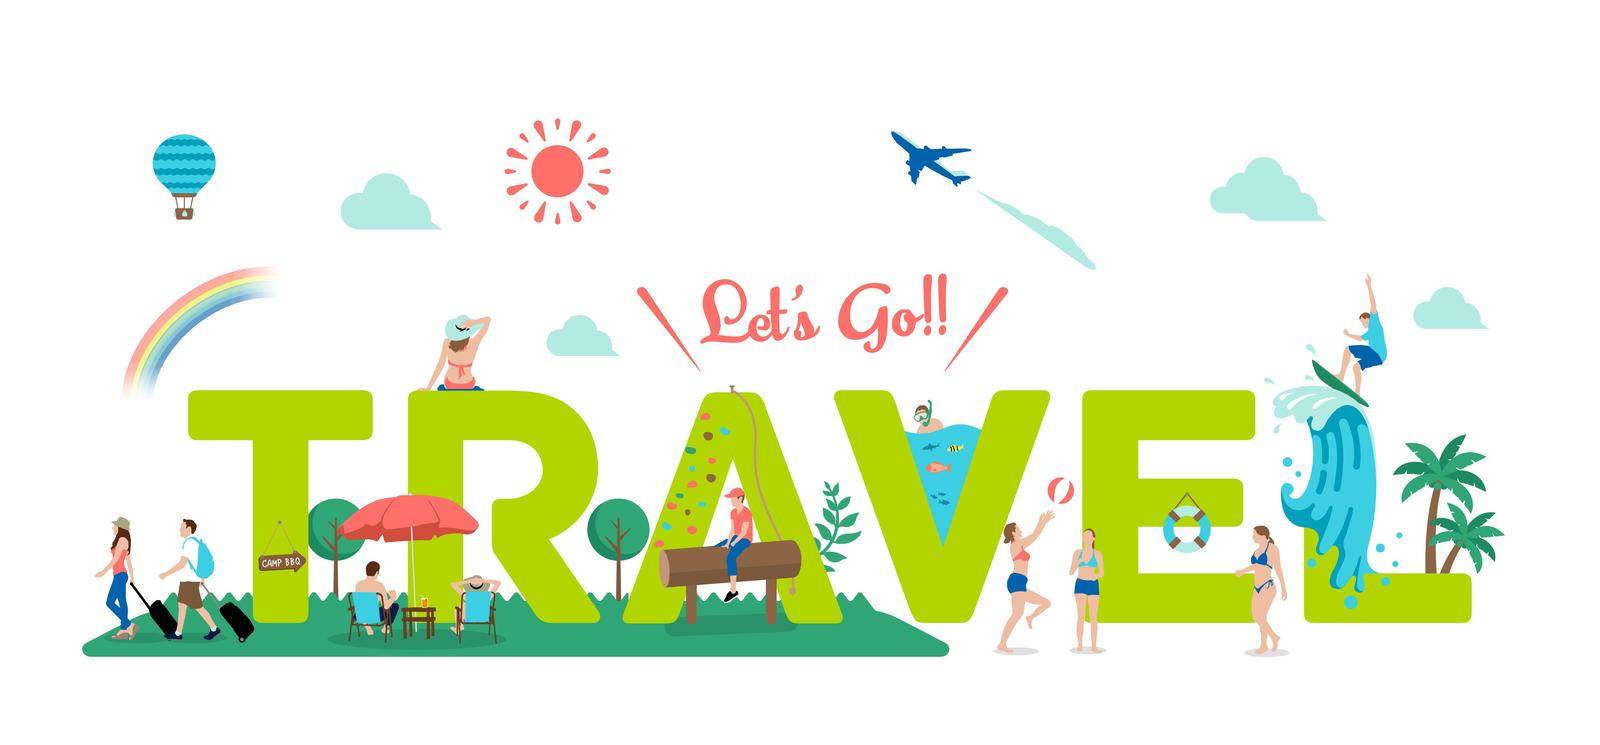 Let's go travel vector banner illustration